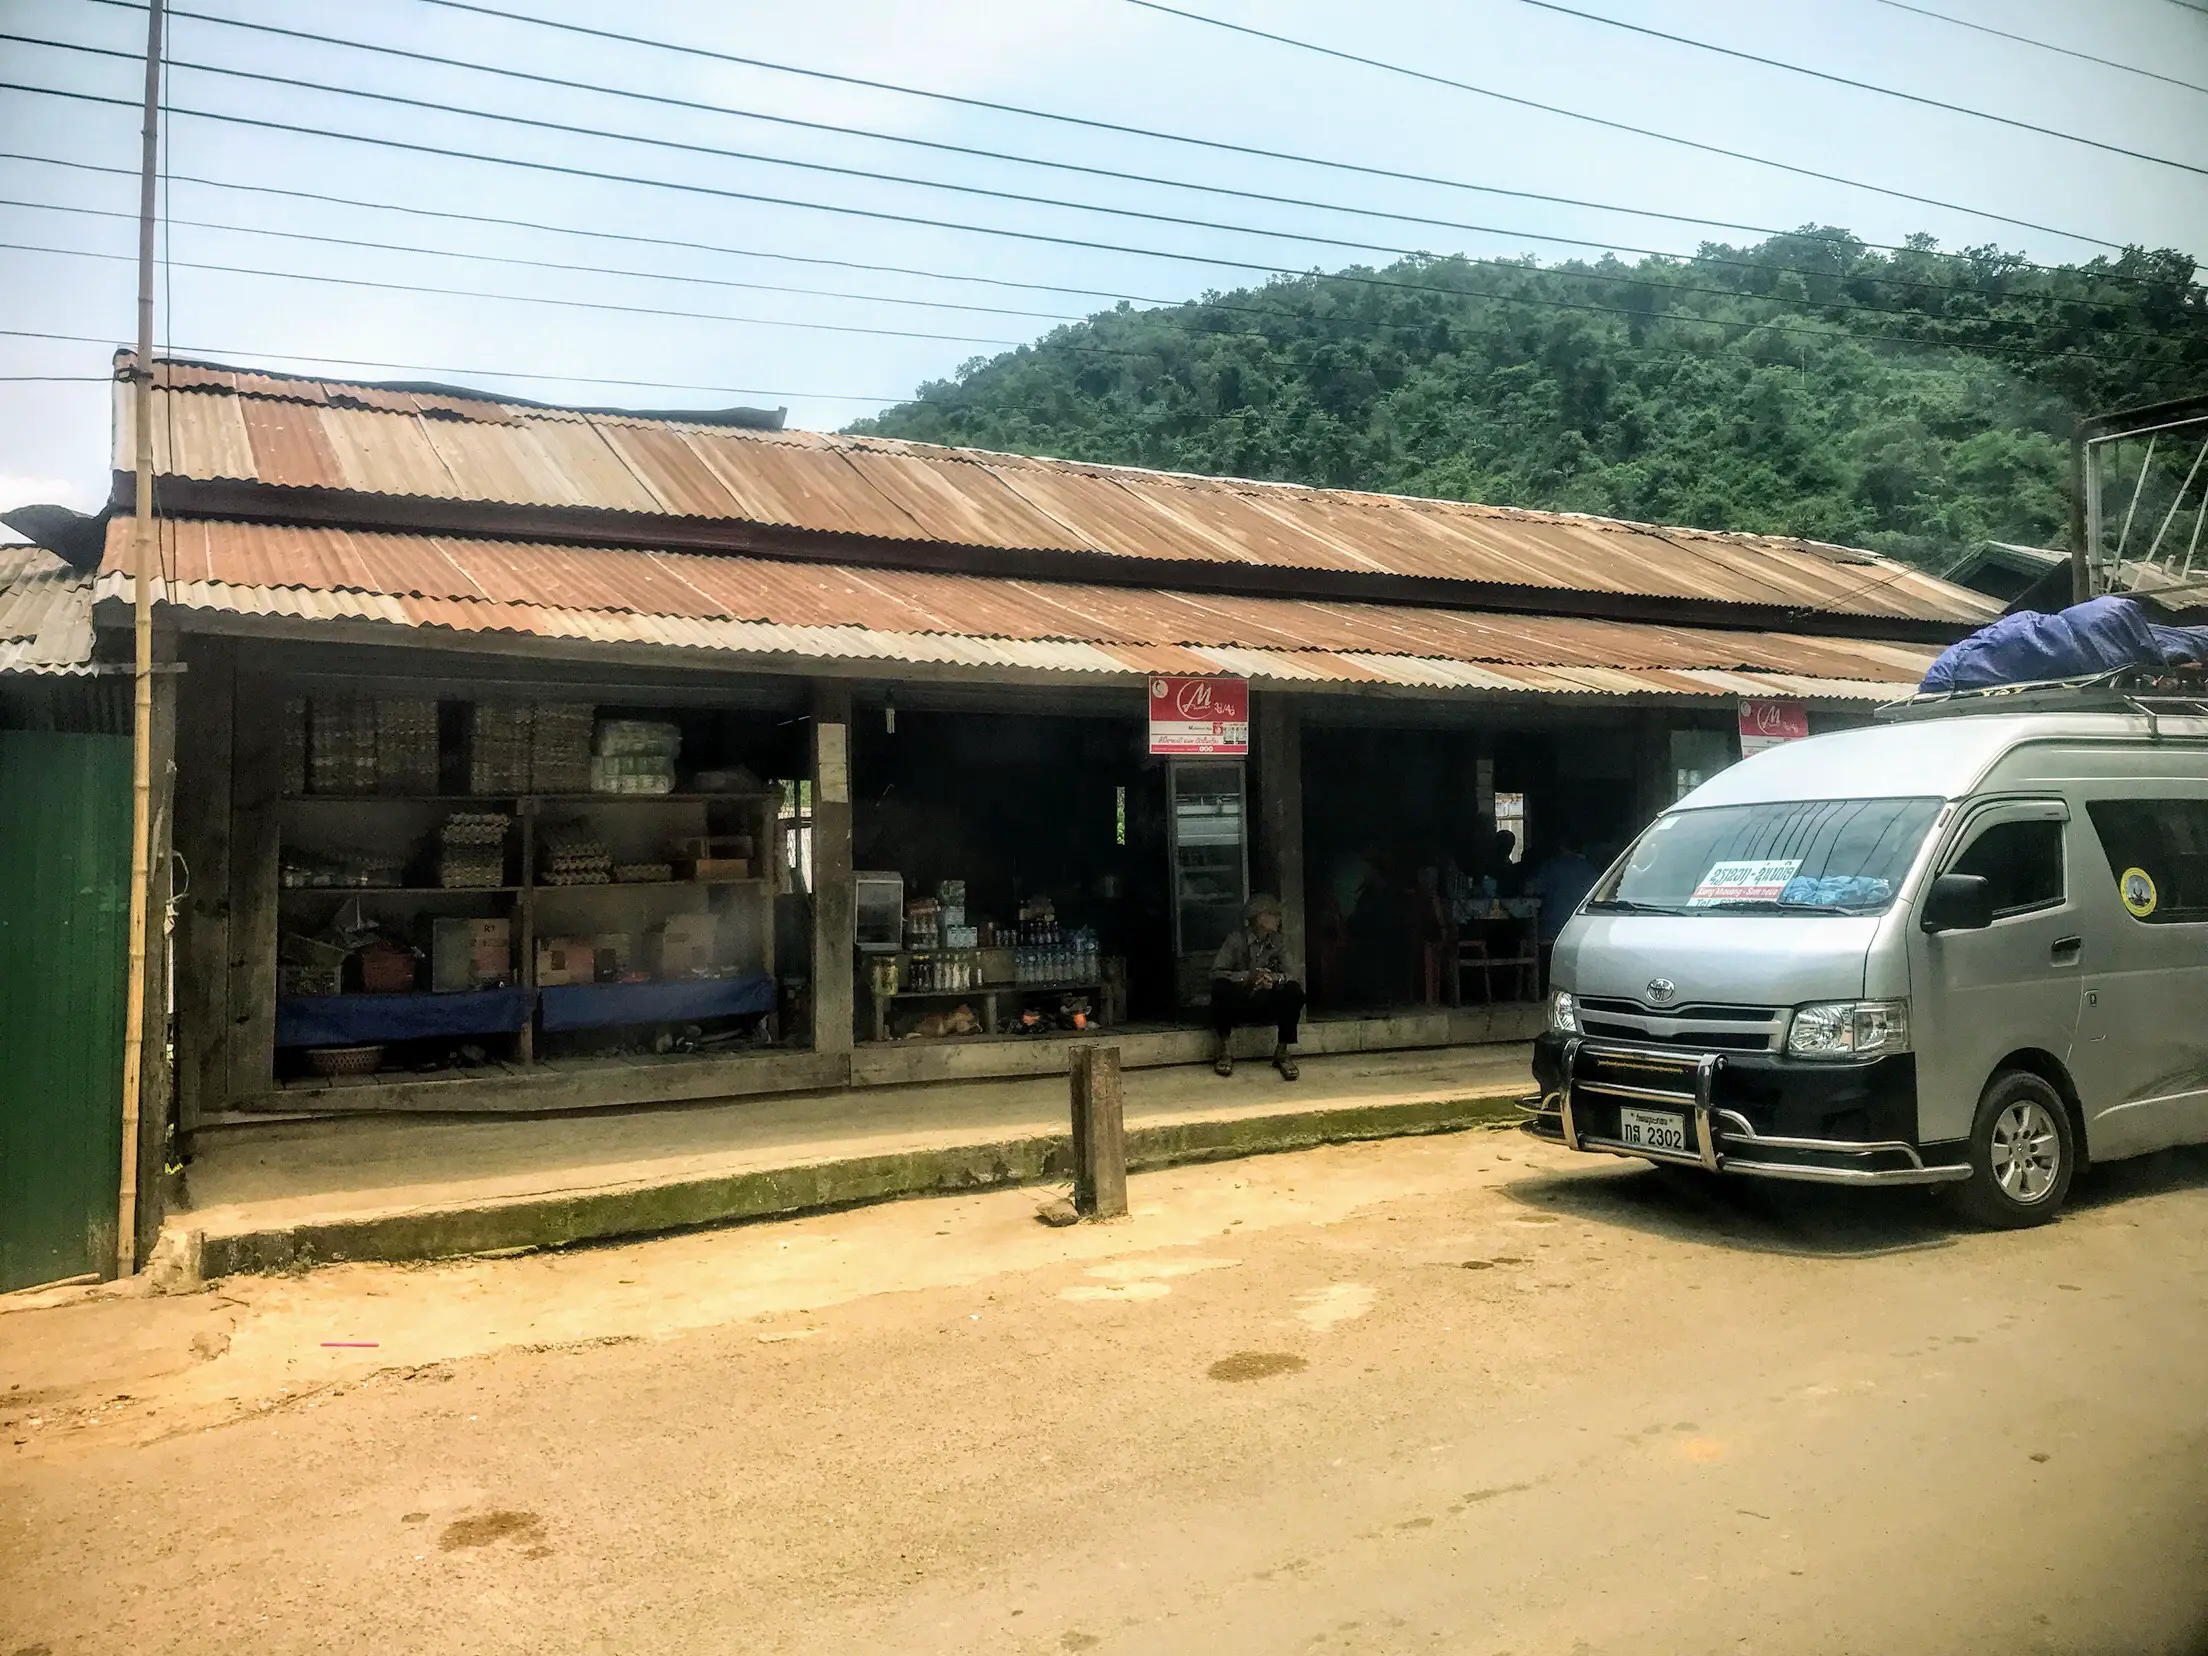 Tourist van outside restaurant, Laos